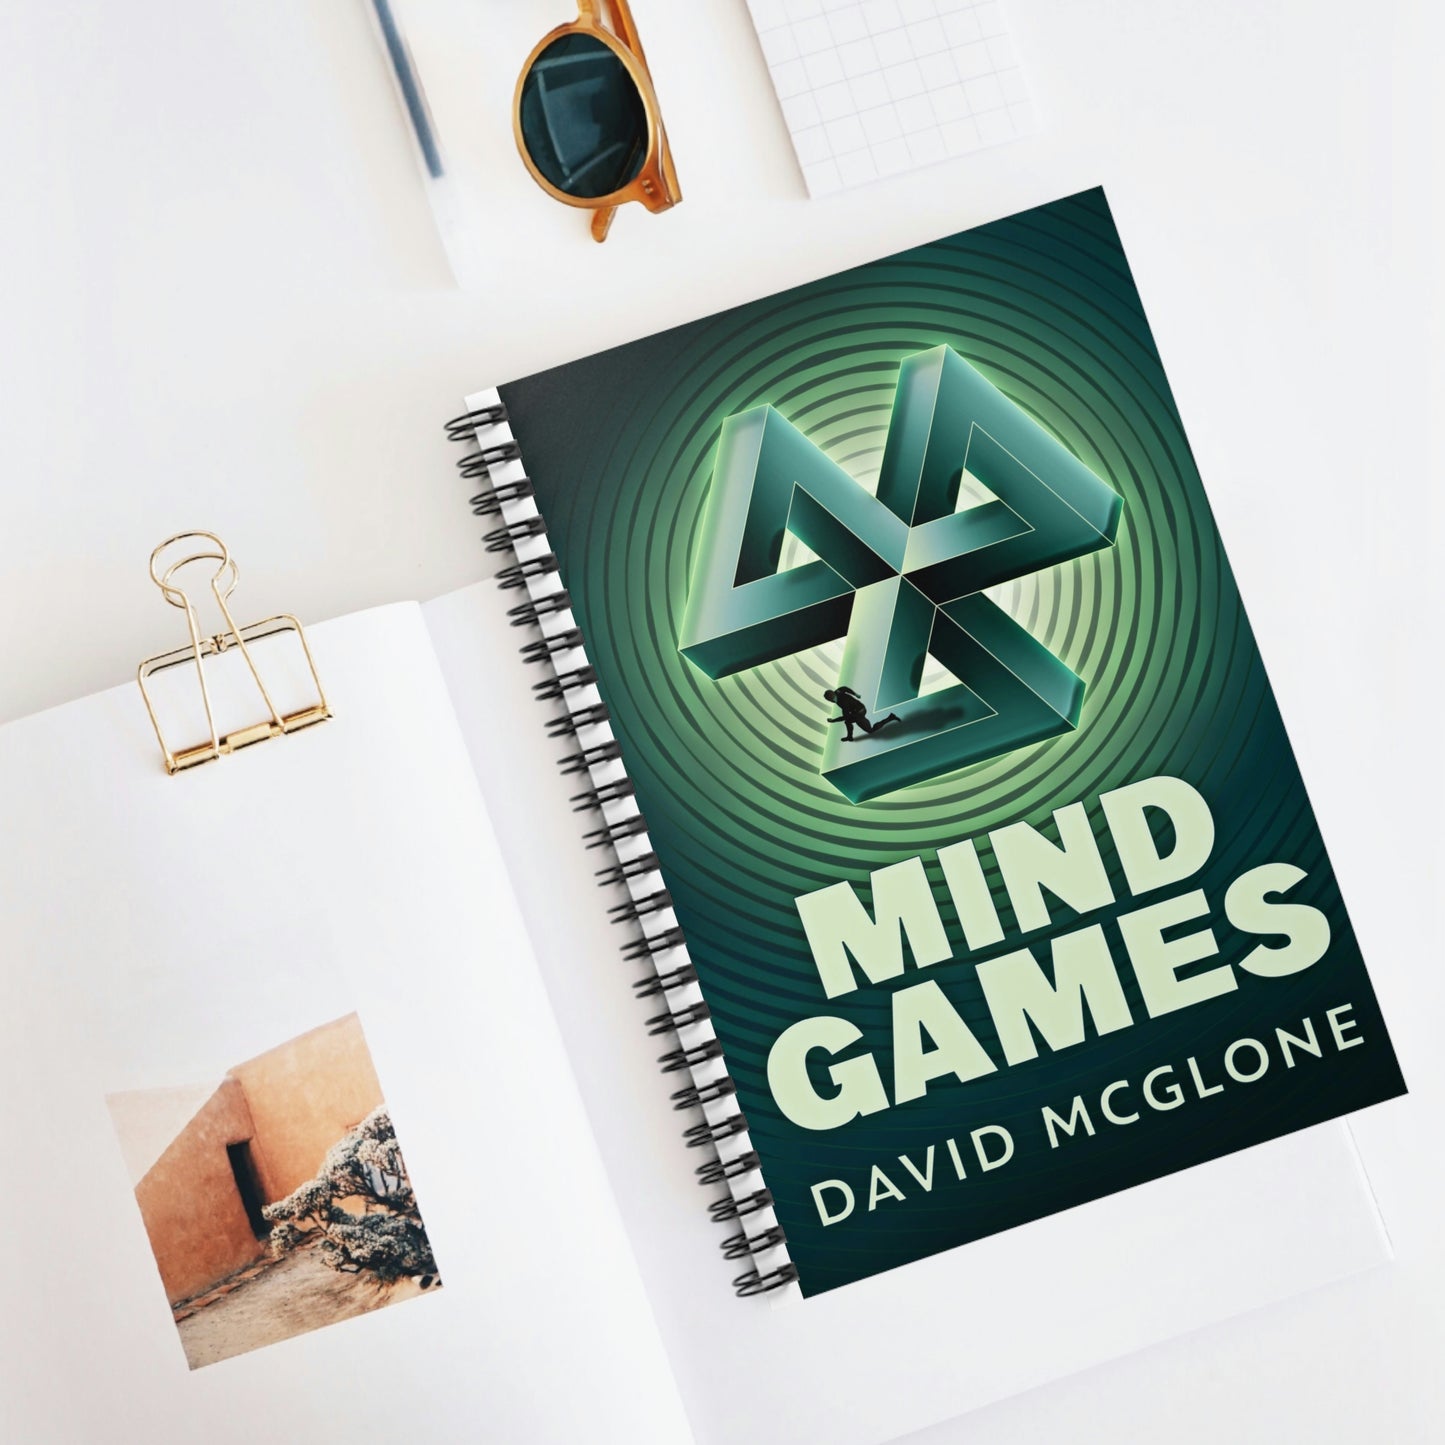 Mind Games - Spiral Notebook